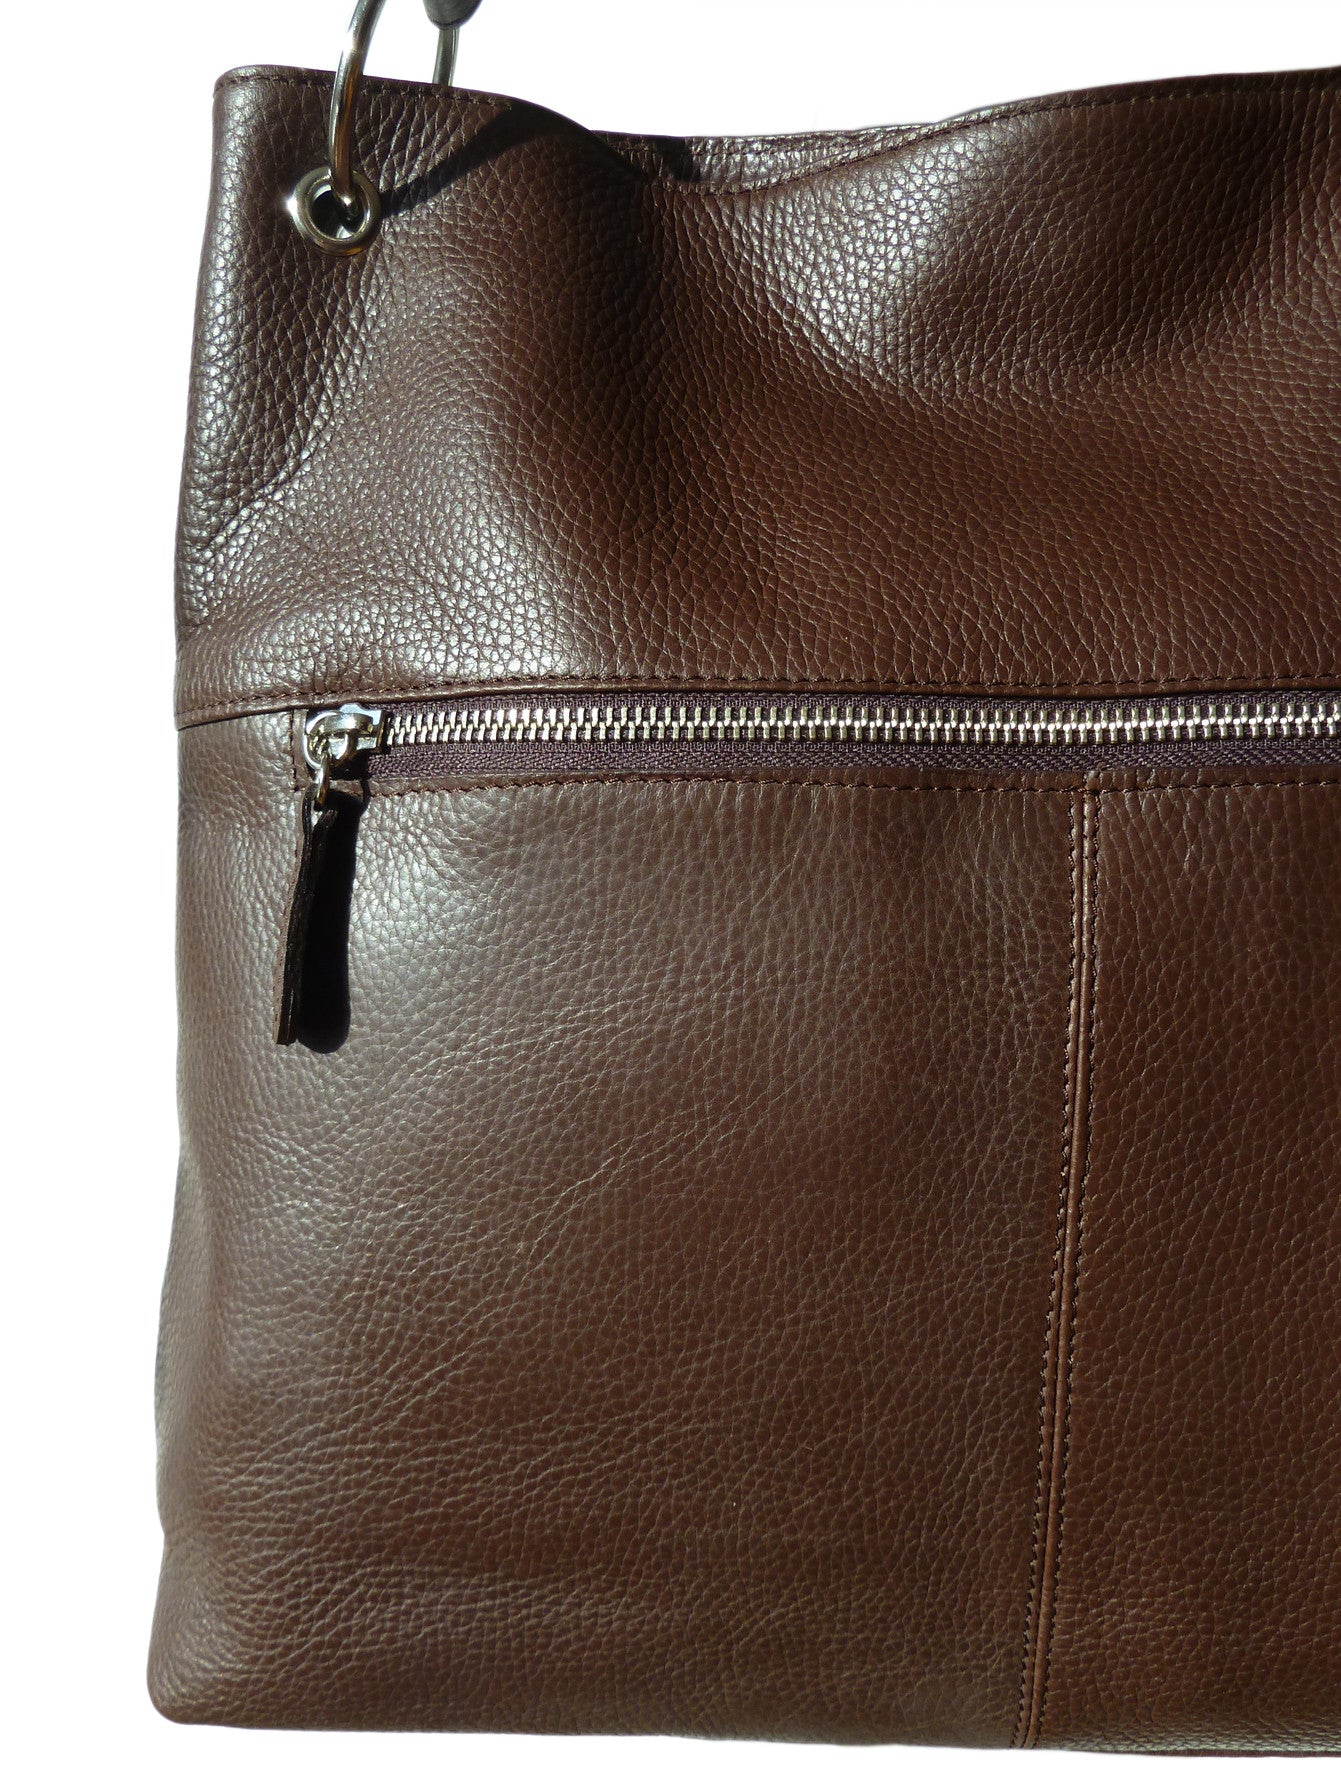 Gapock X Crossbody Bag Pebble Grain Leather Chocolate